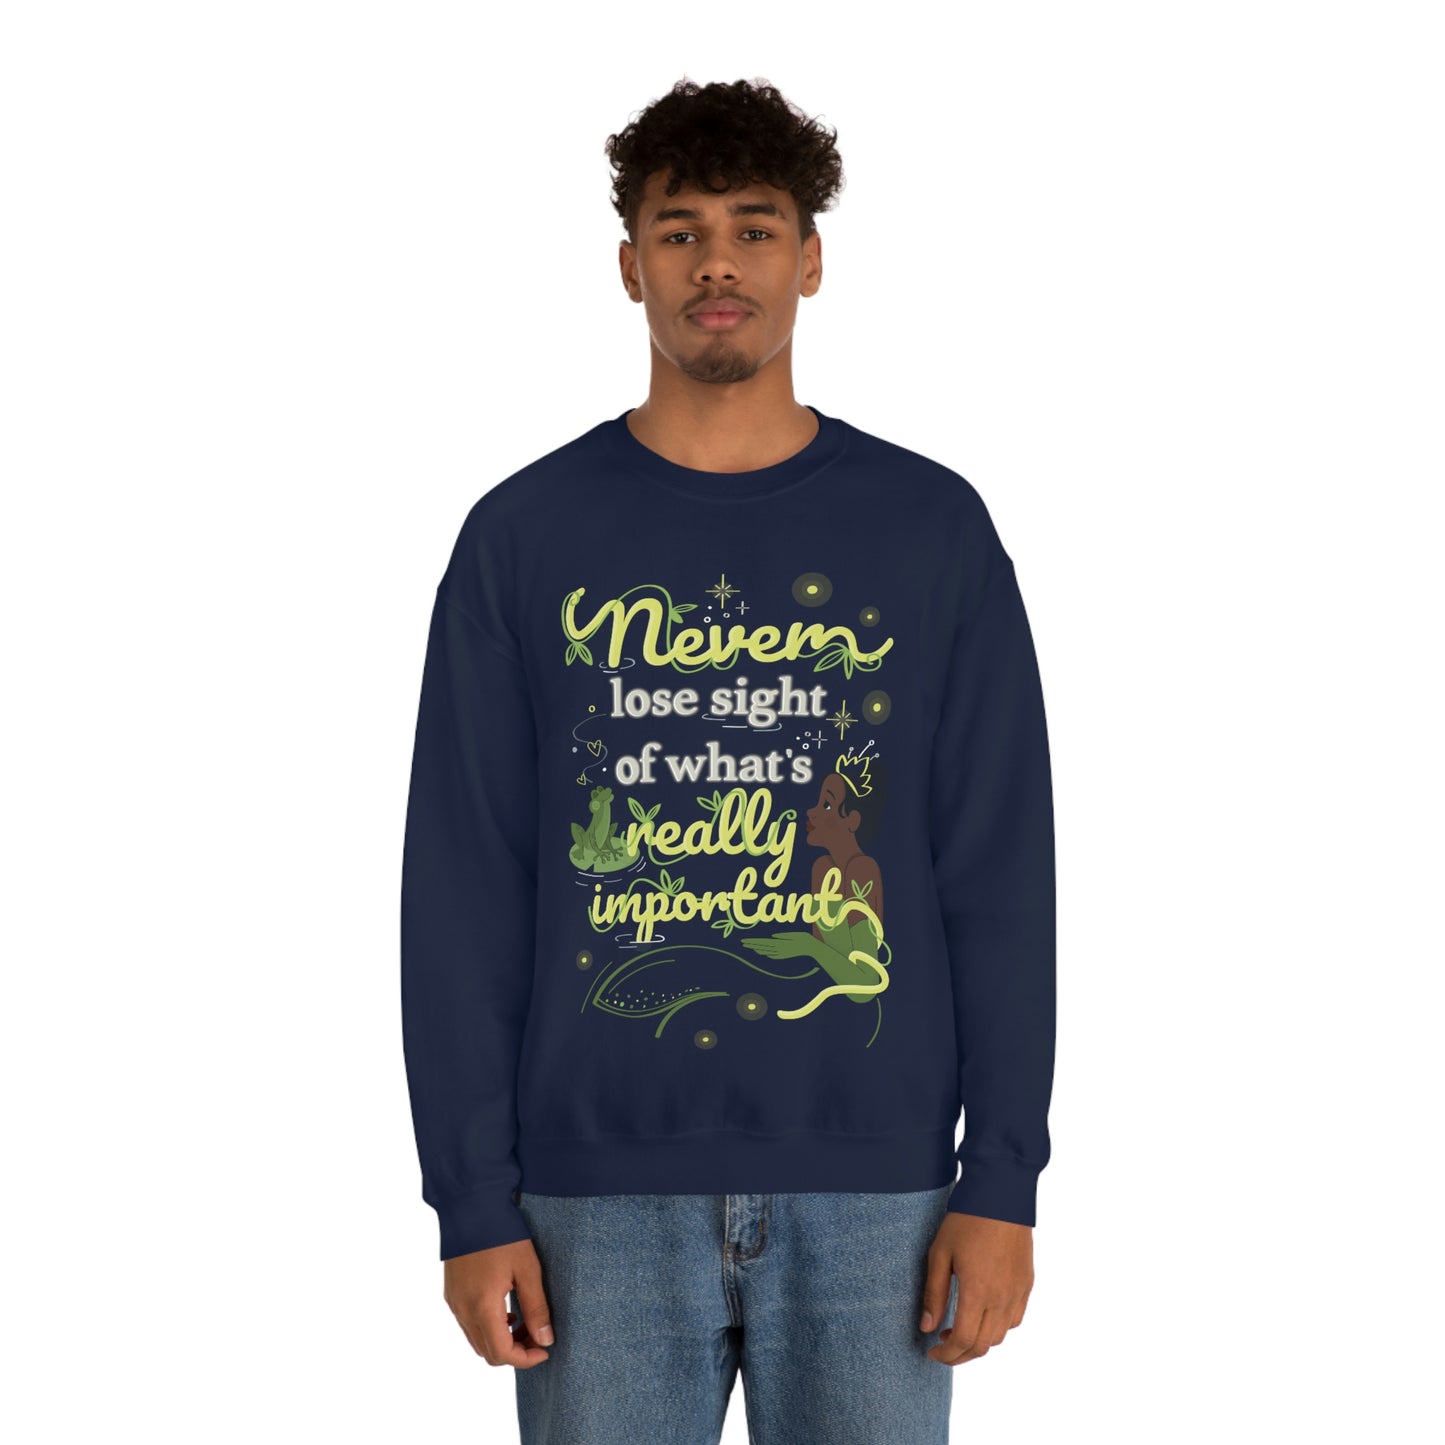 Tiana Princess - Adult Crewneck Sweatshirt